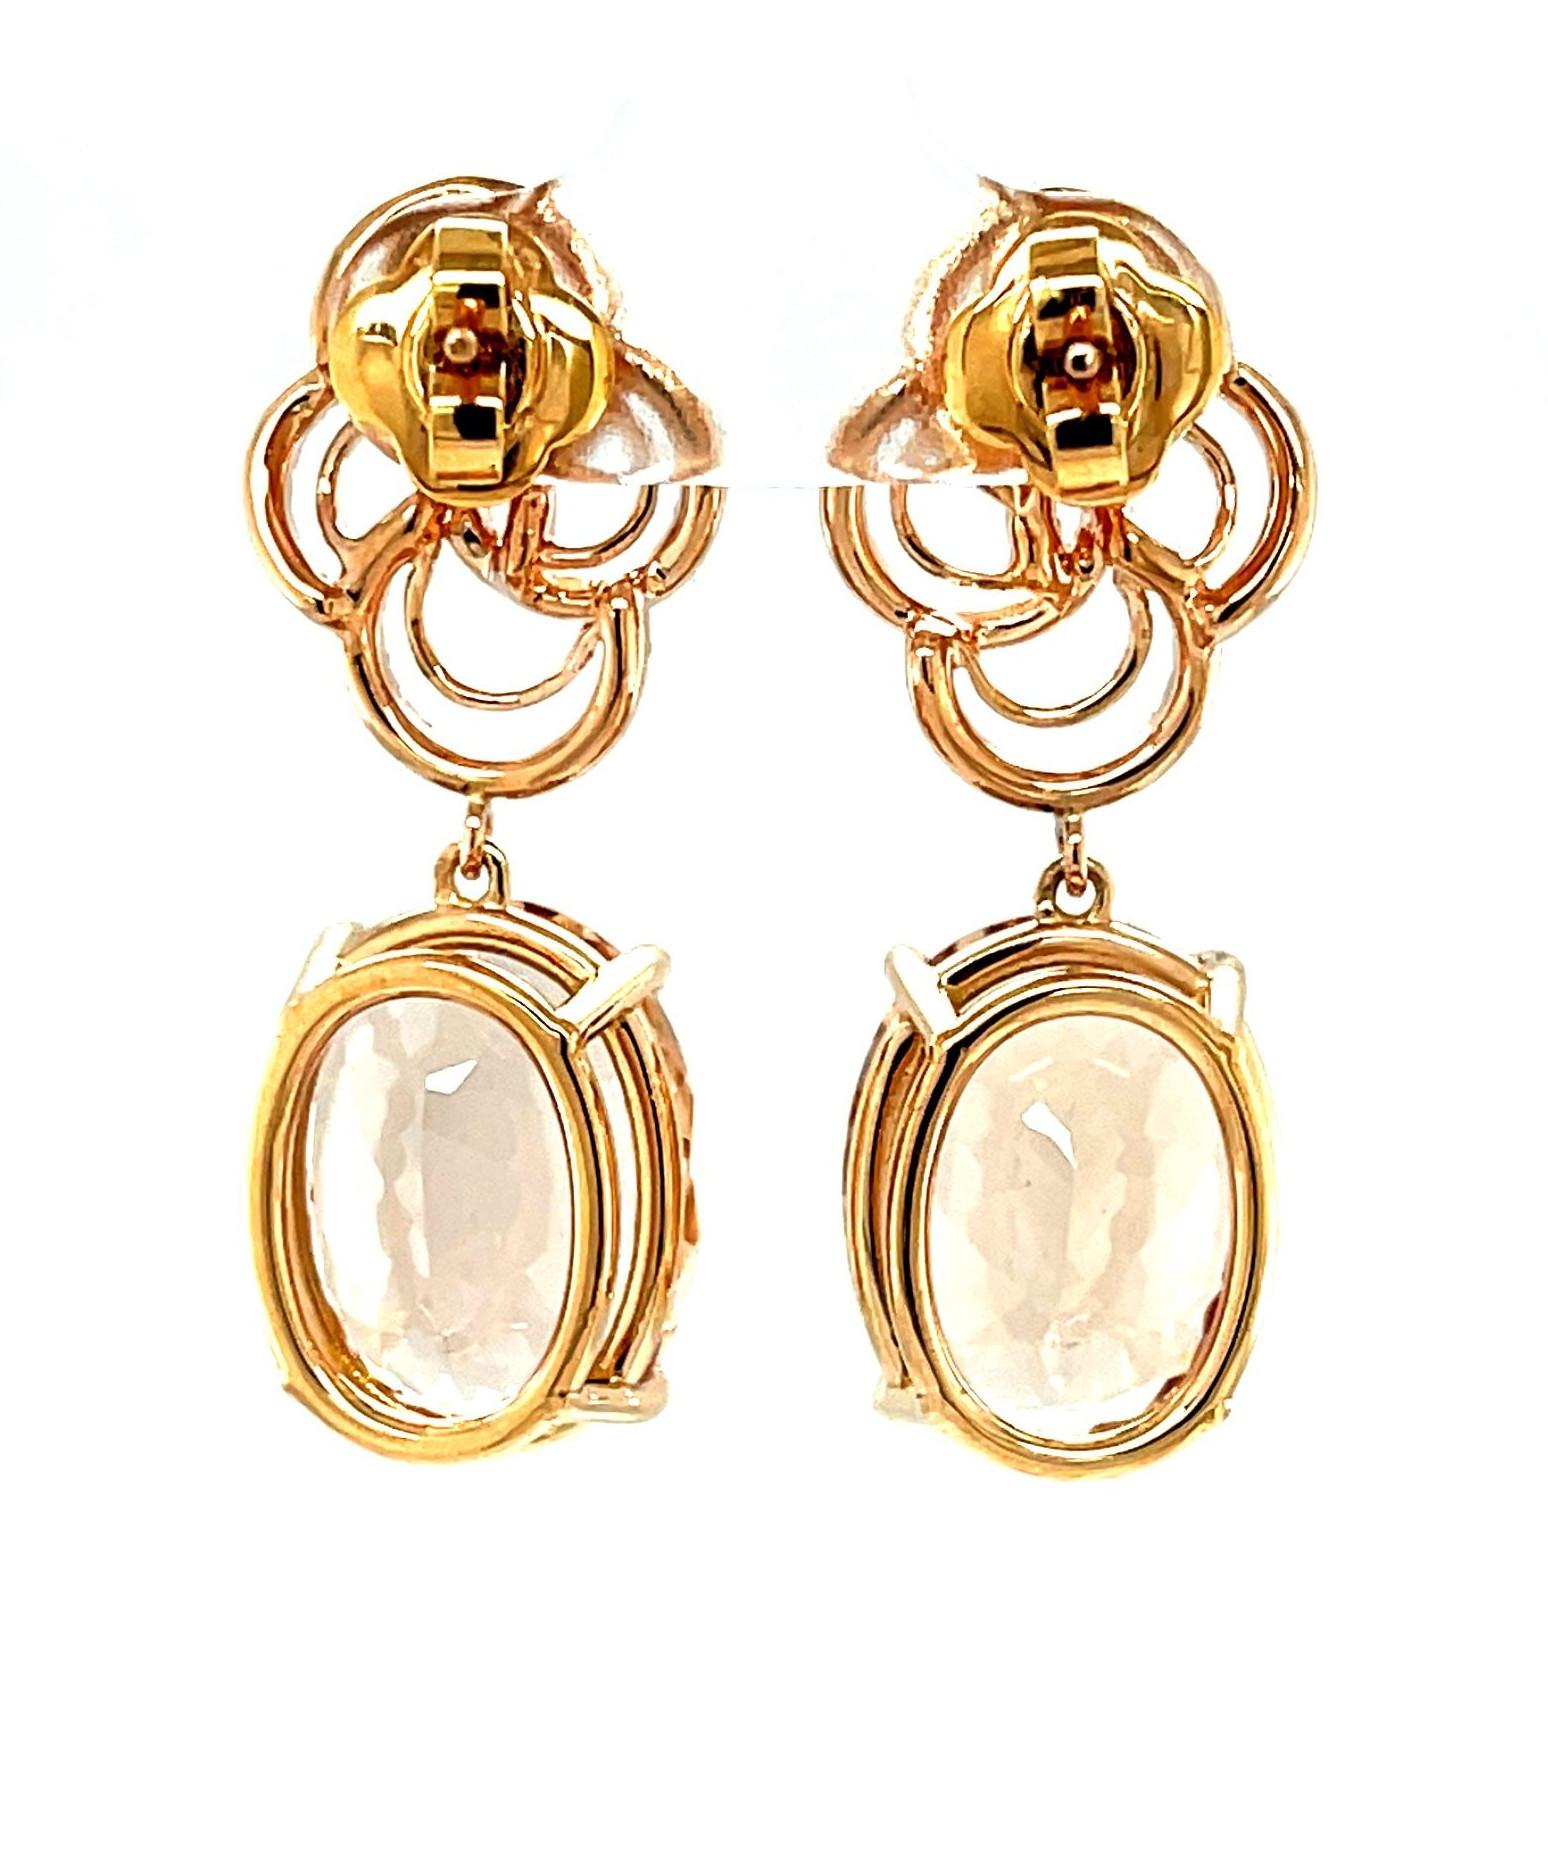 Artisan Morganite and Diamond Dangle Earrings in 18k Rose Gold, 23.49 Carats Total  For Sale